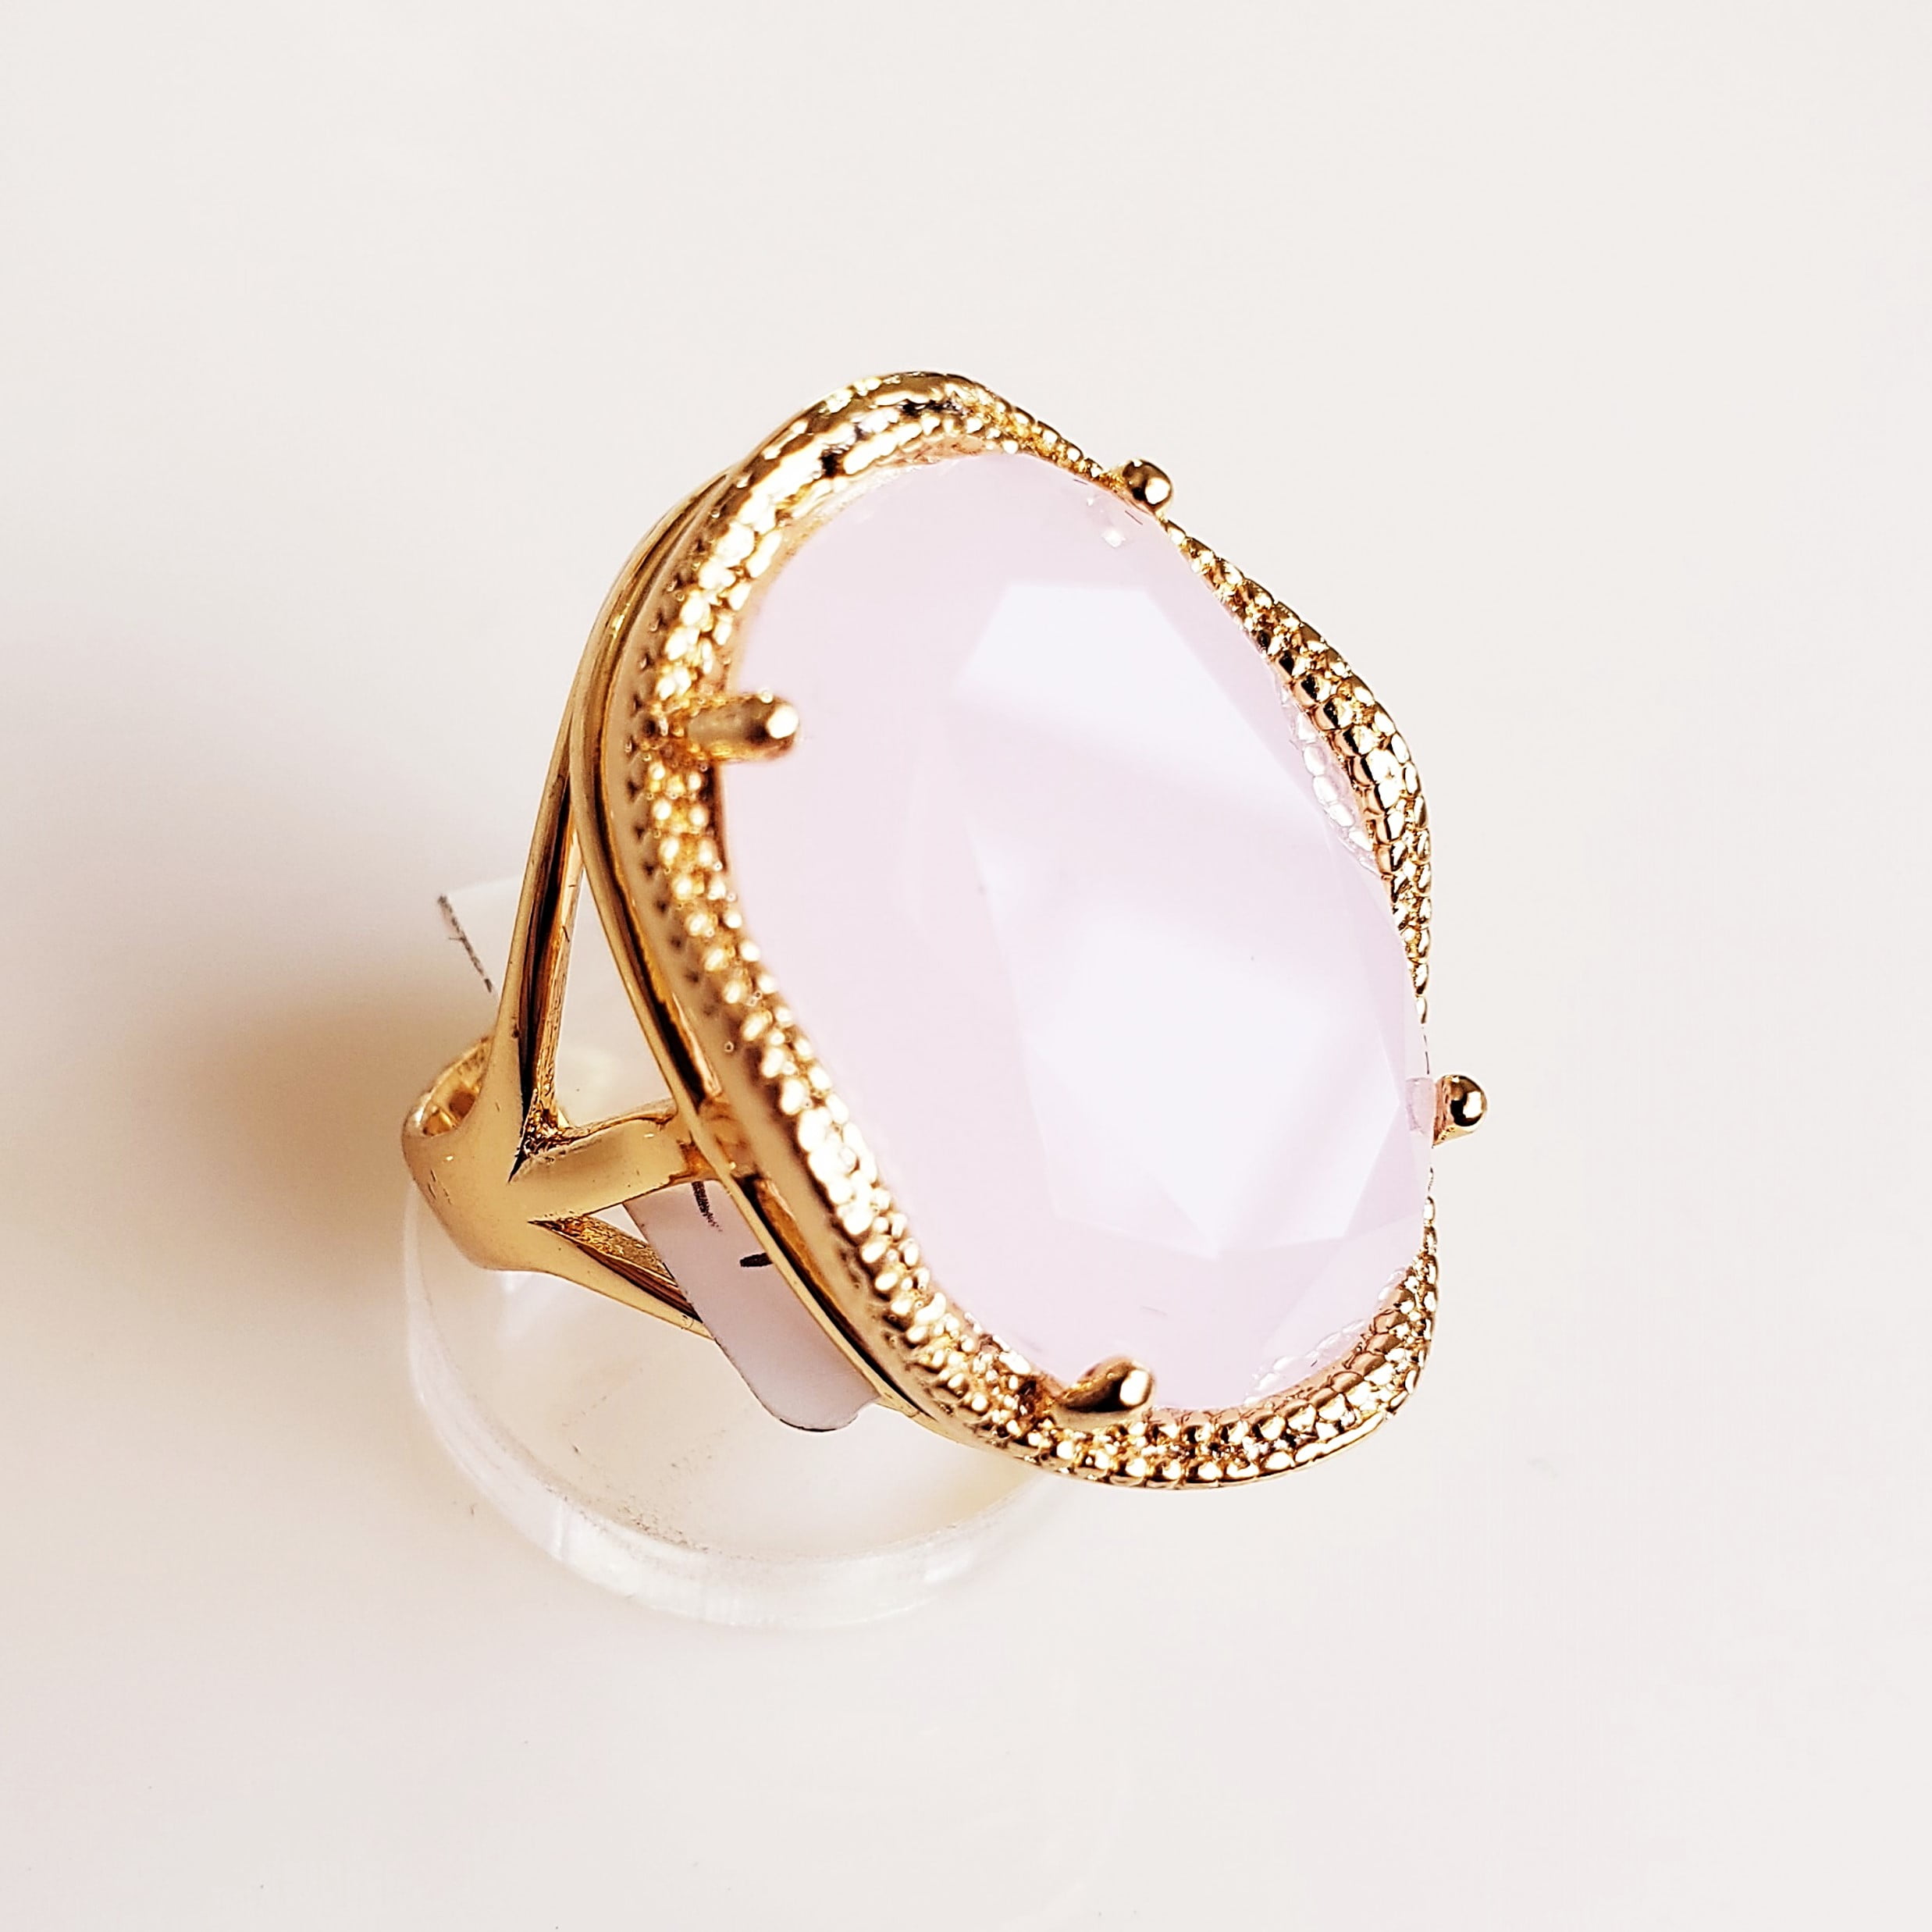 Anel cristal rosa leitoso oval 15x20mm  -1   